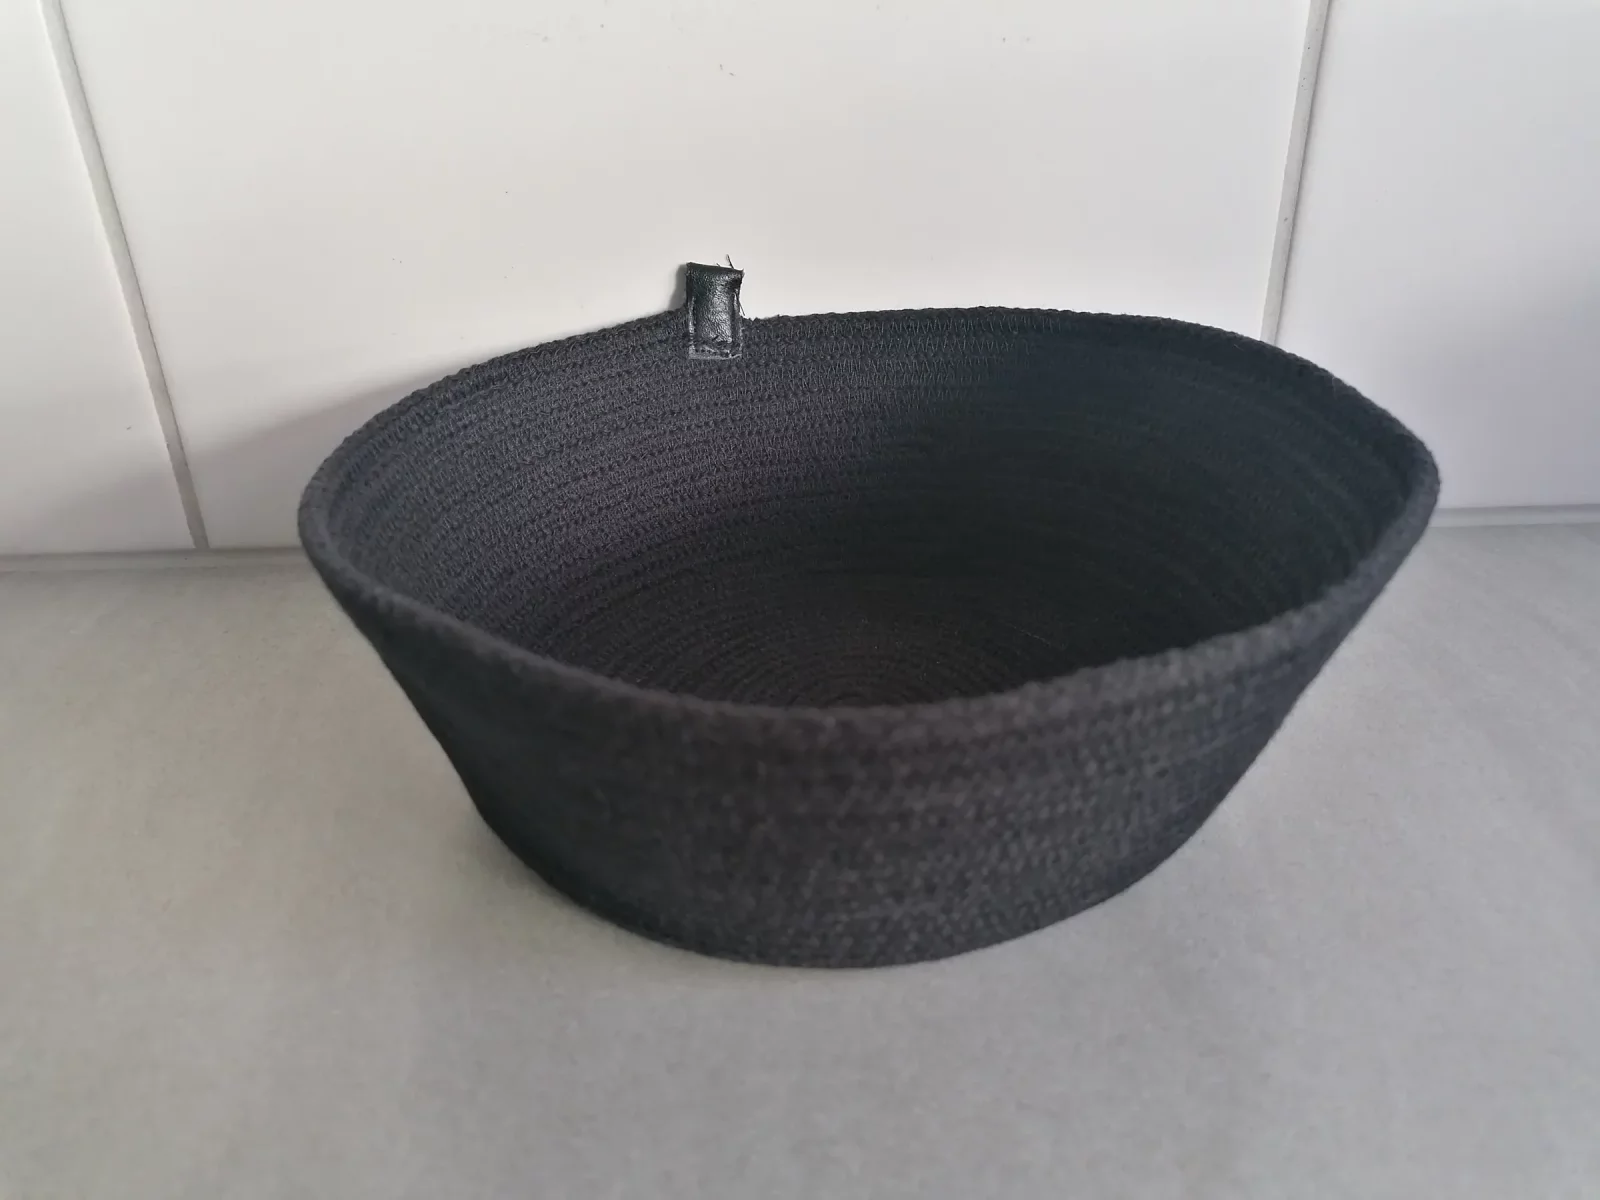 Robe Bowl schwarz 18x9 cm